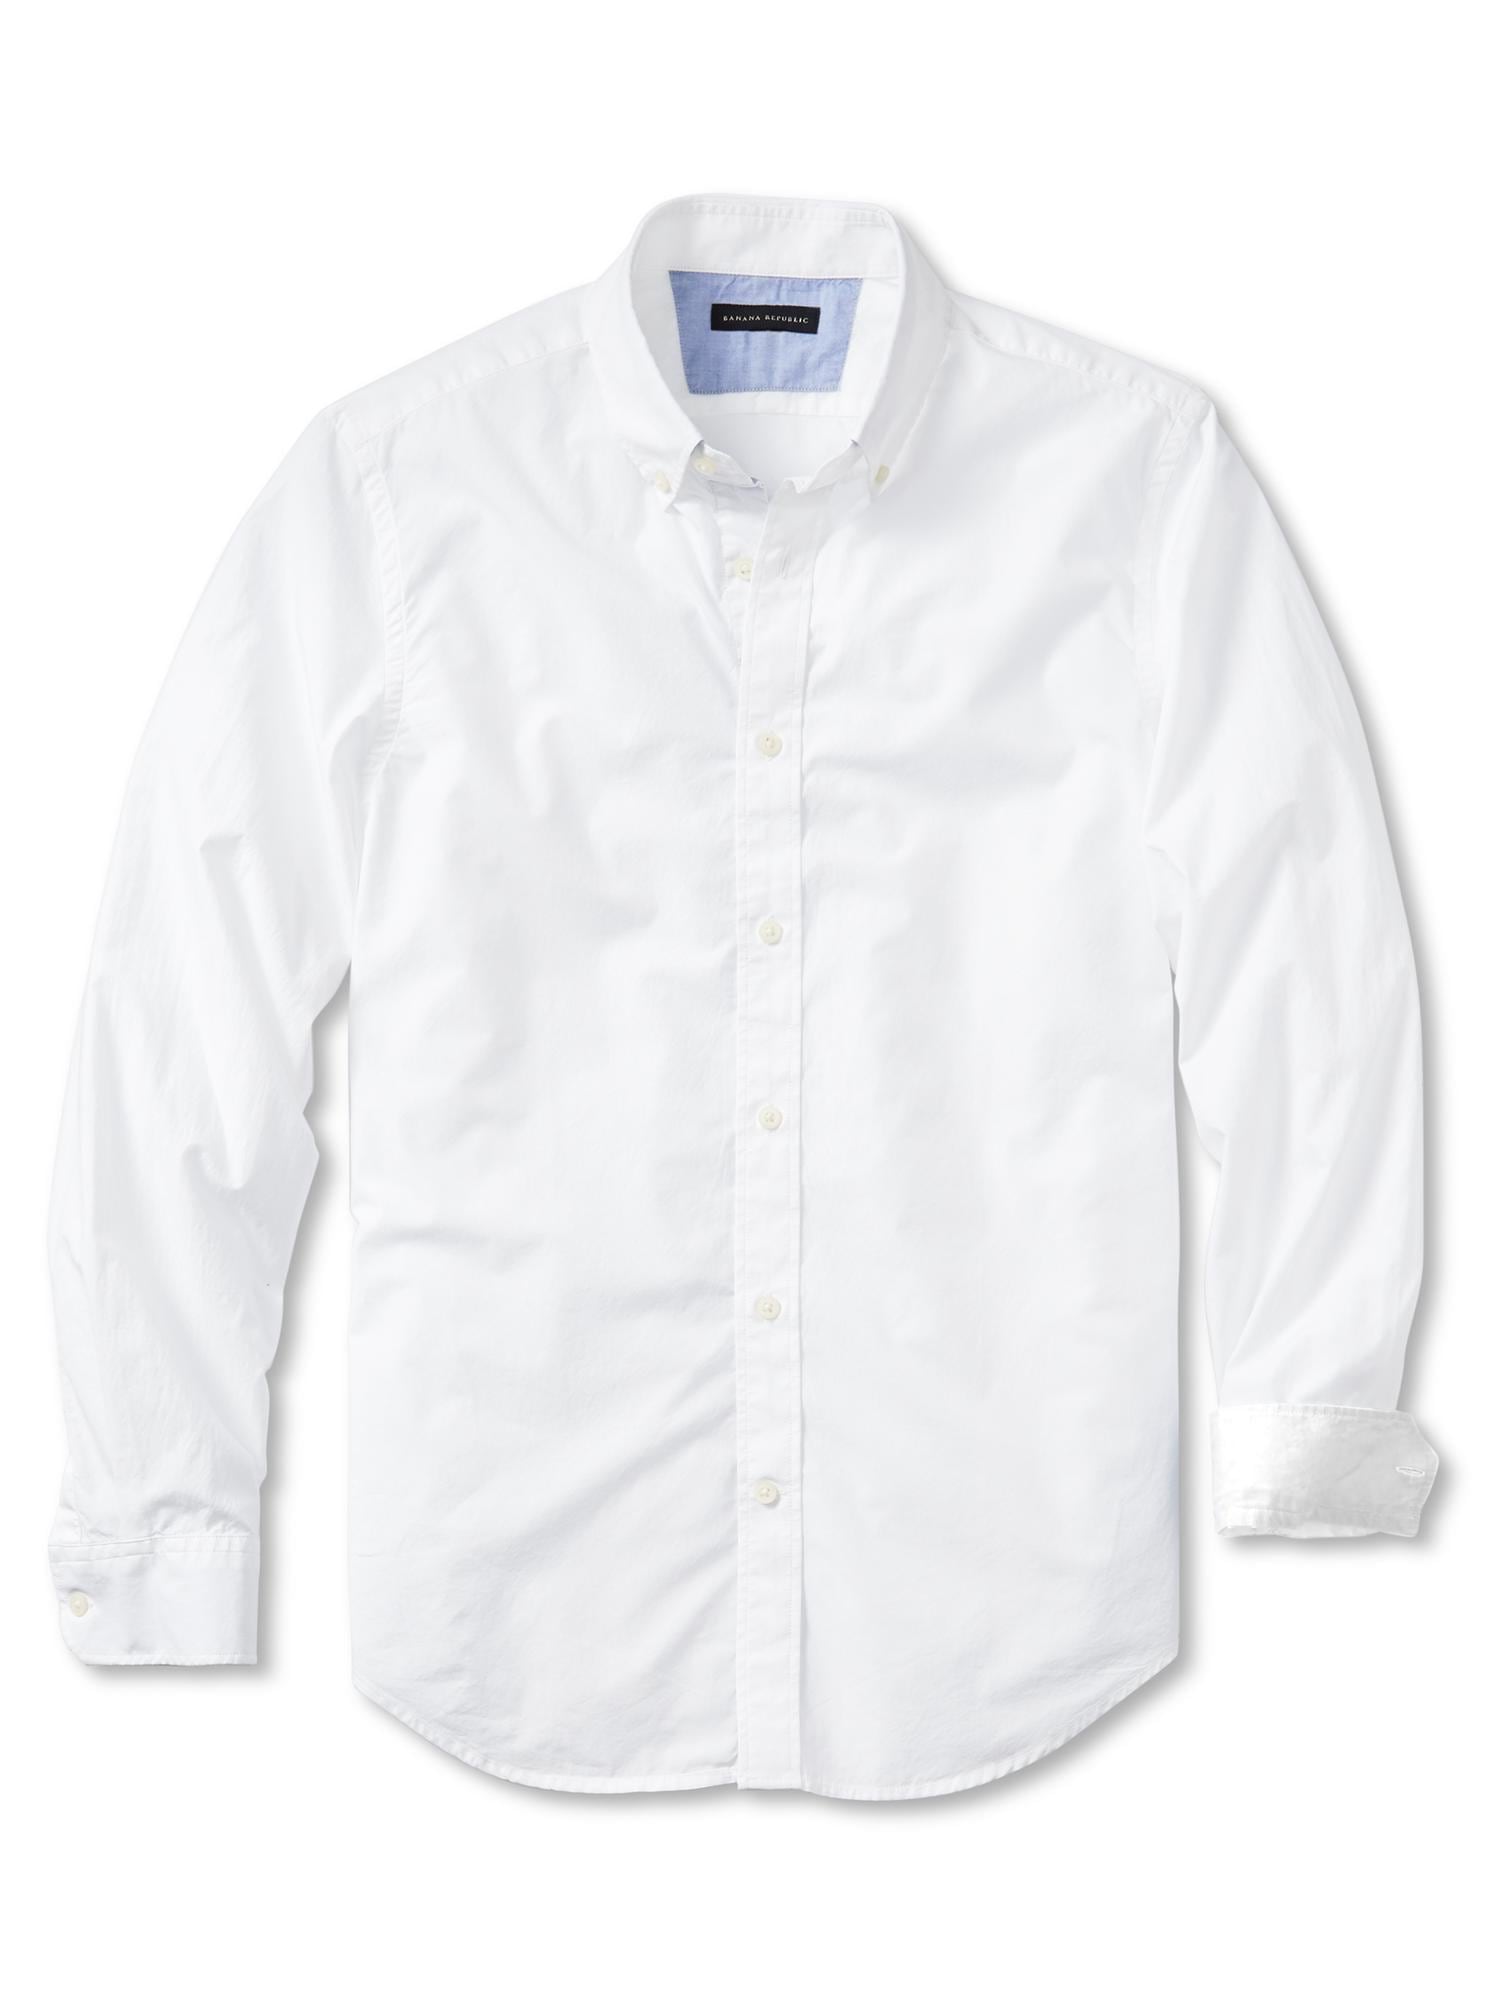 Tailored Slim-Fit Soft-Wash Textured Shirt